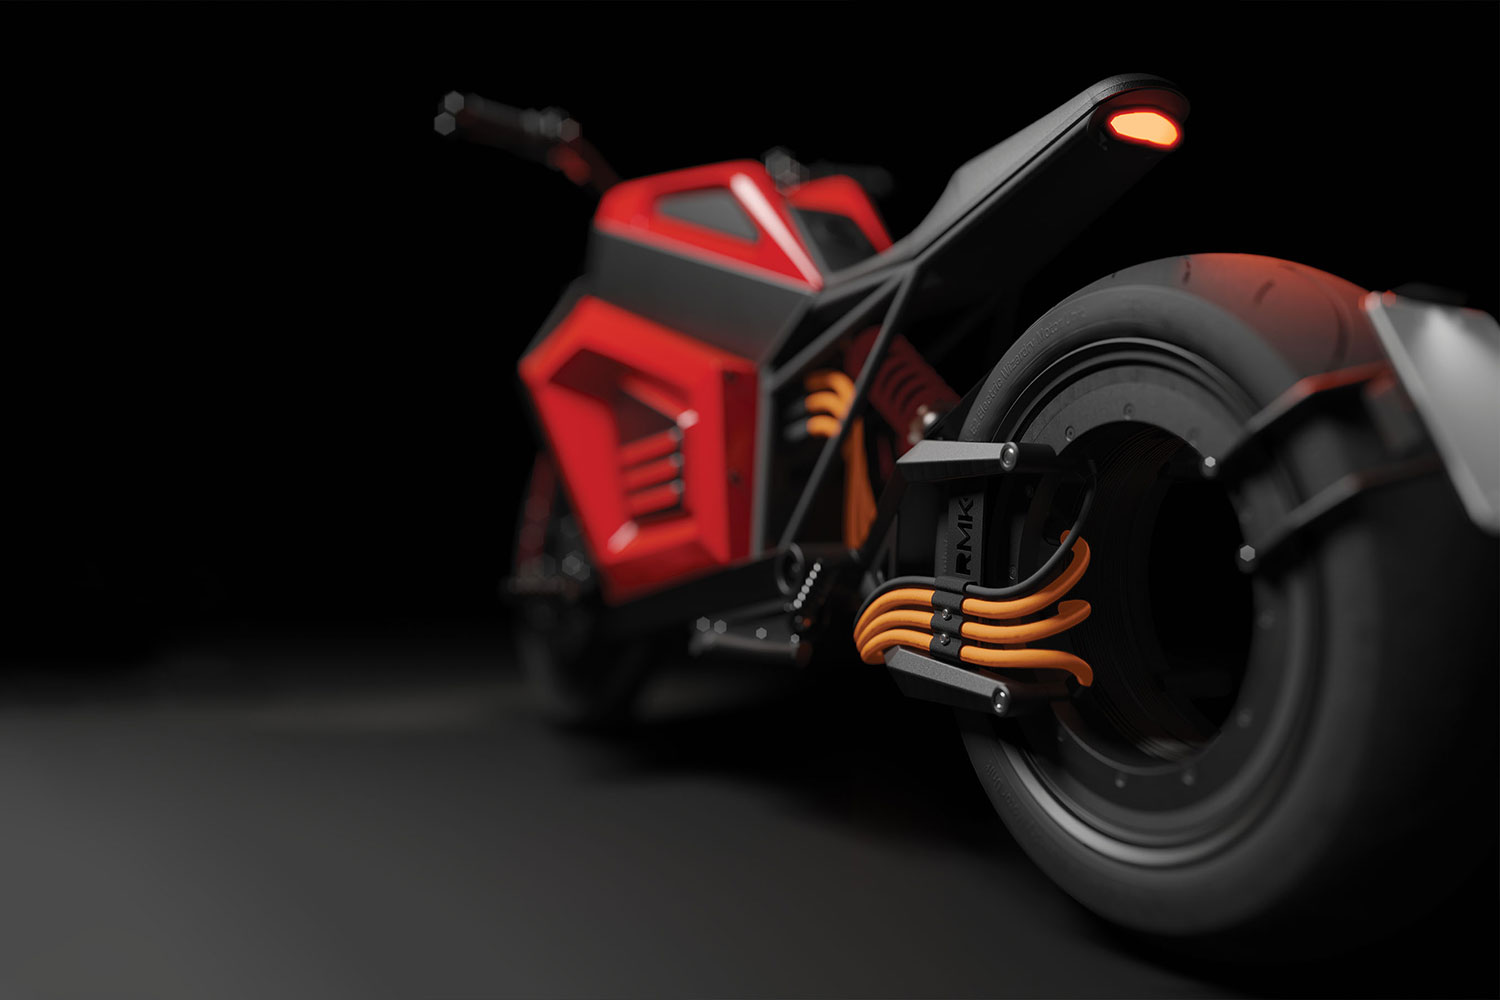 rmk e2 electric motorcycle debut 2